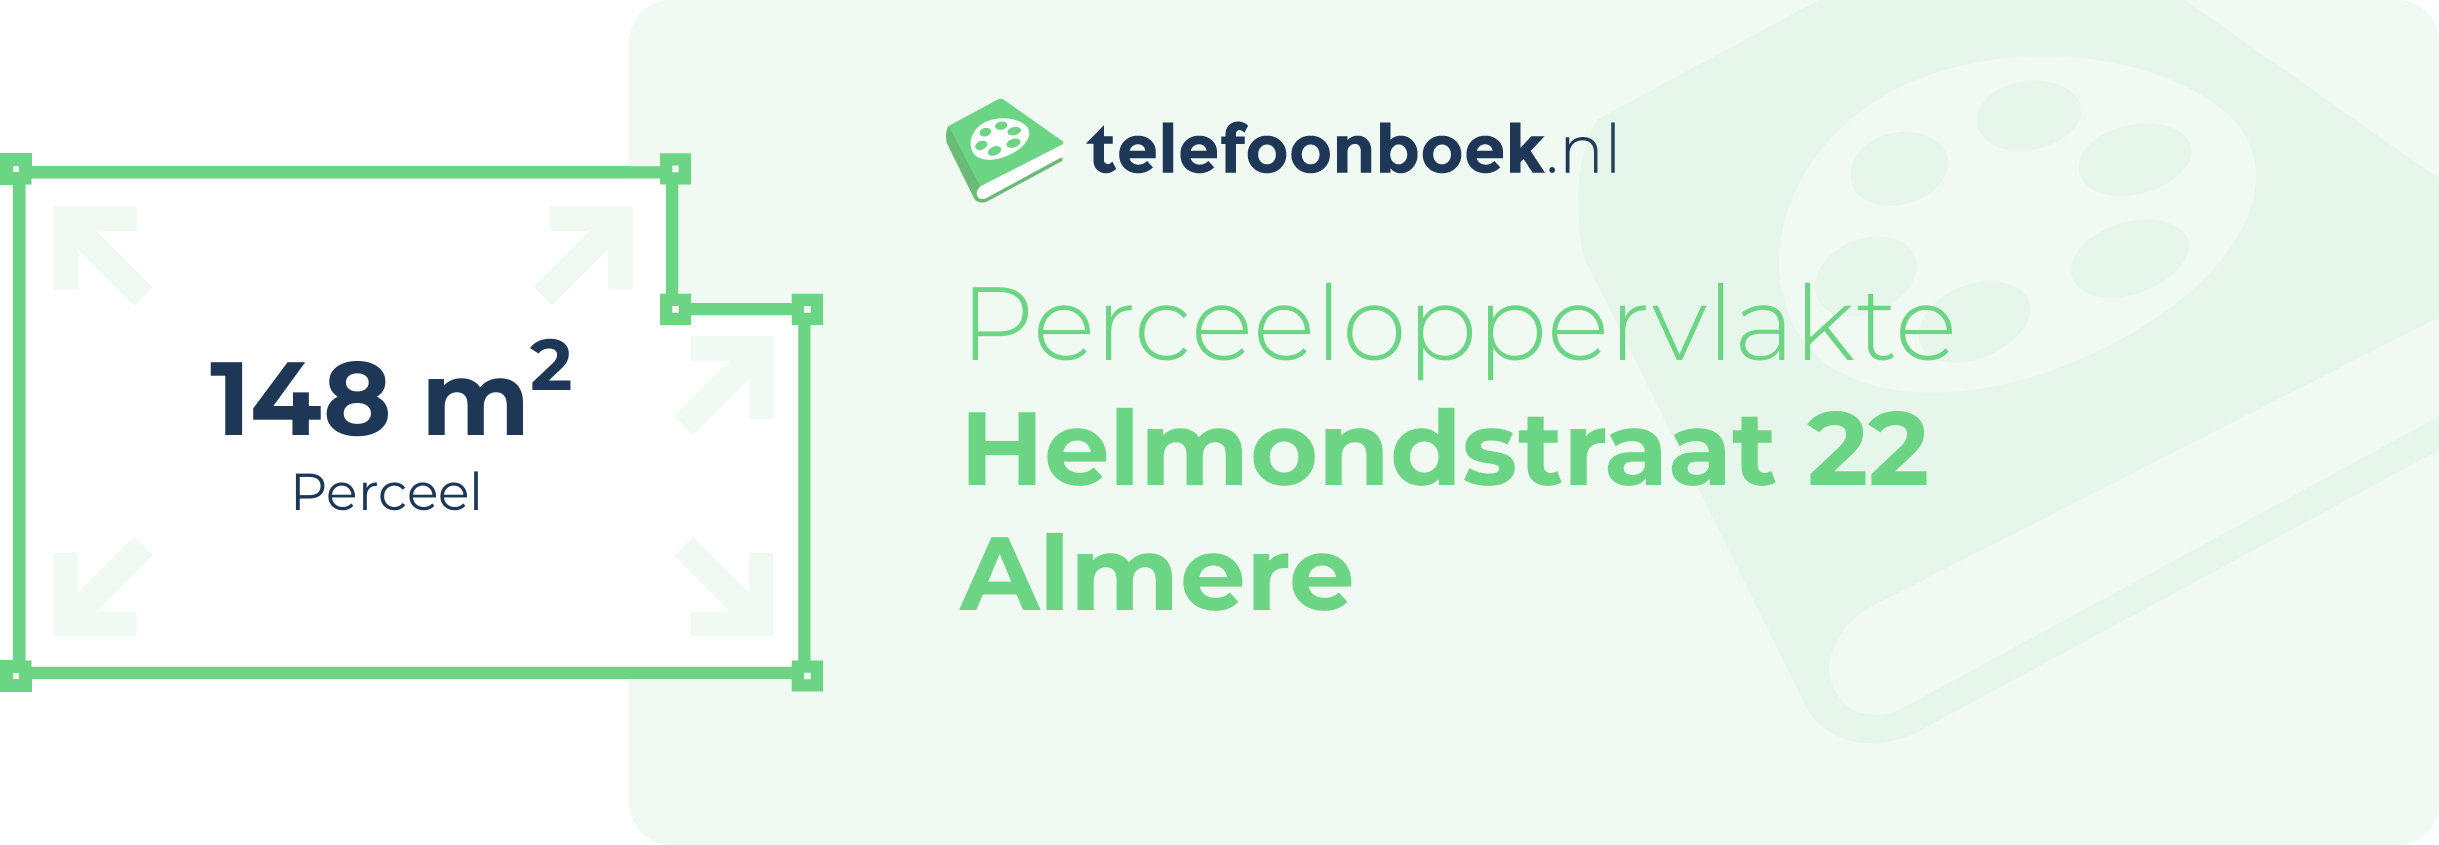 Perceeloppervlakte Helmondstraat 22 Almere